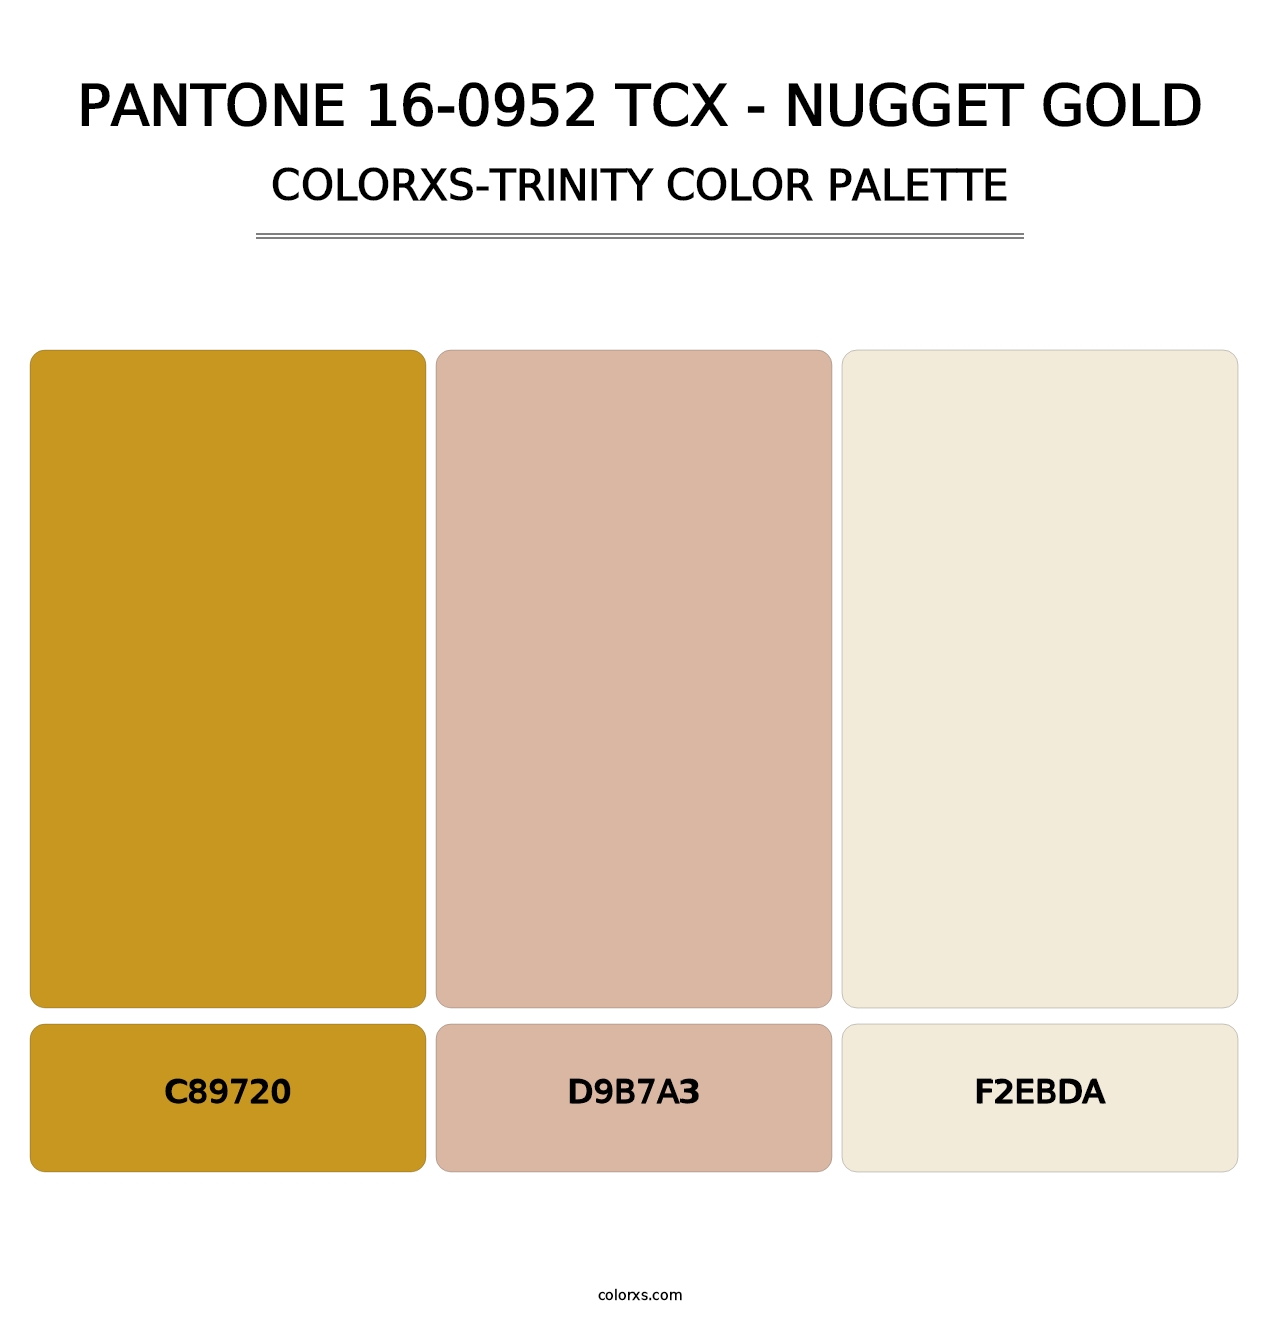 PANTONE 16-0952 TCX - Nugget Gold - Colorxs Trinity Palette